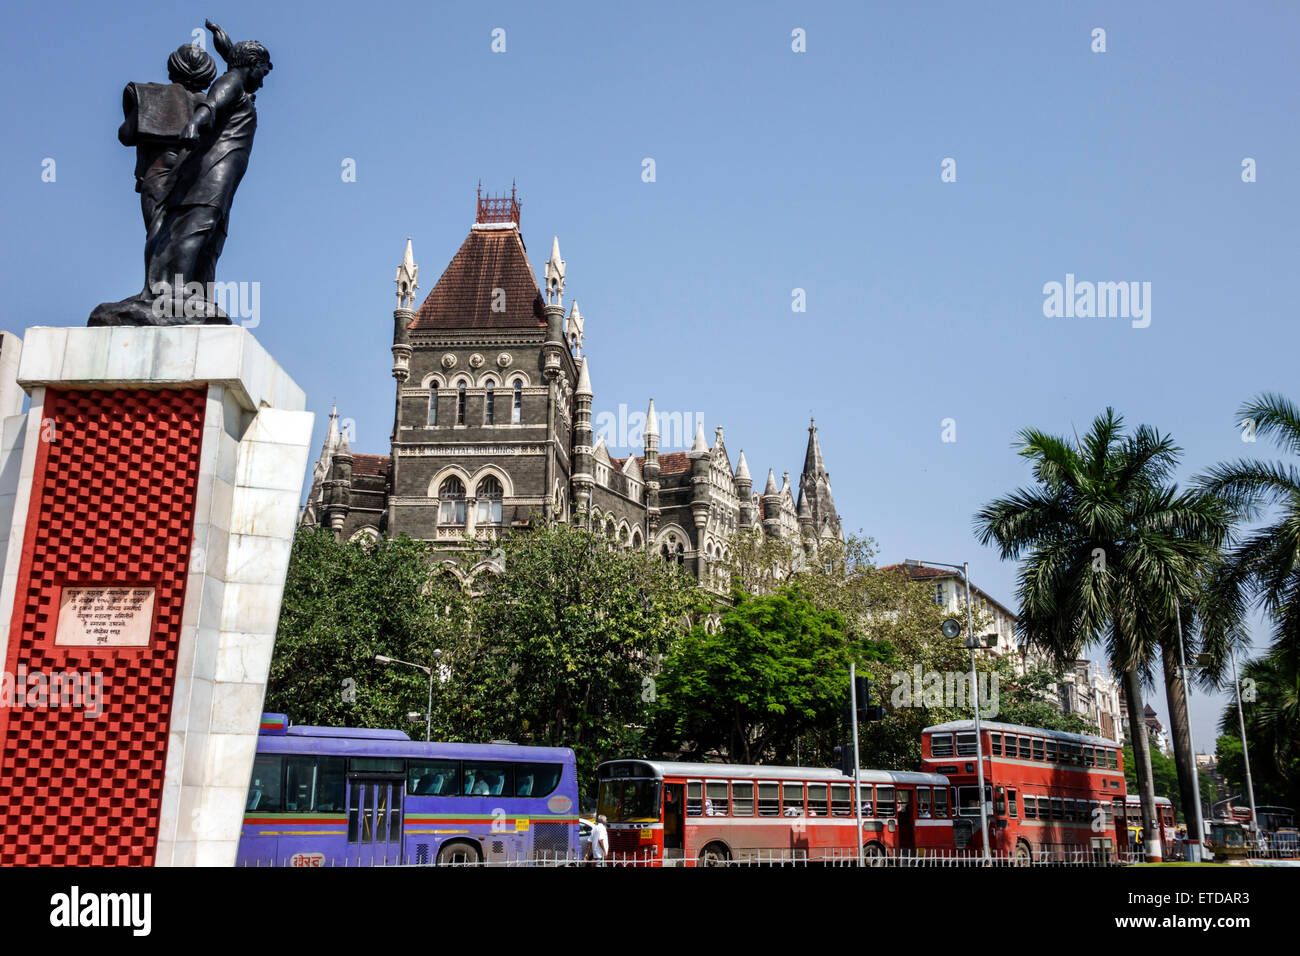 Mumbai India, Fort Mumbai, Kala Ghoda, Fontana floreale, Hutatma Chowk, Martyr's Square, Samyukta Maharashtra Movement Memorial, BEST bus, pullman, traffico, Oriente Foto Stock